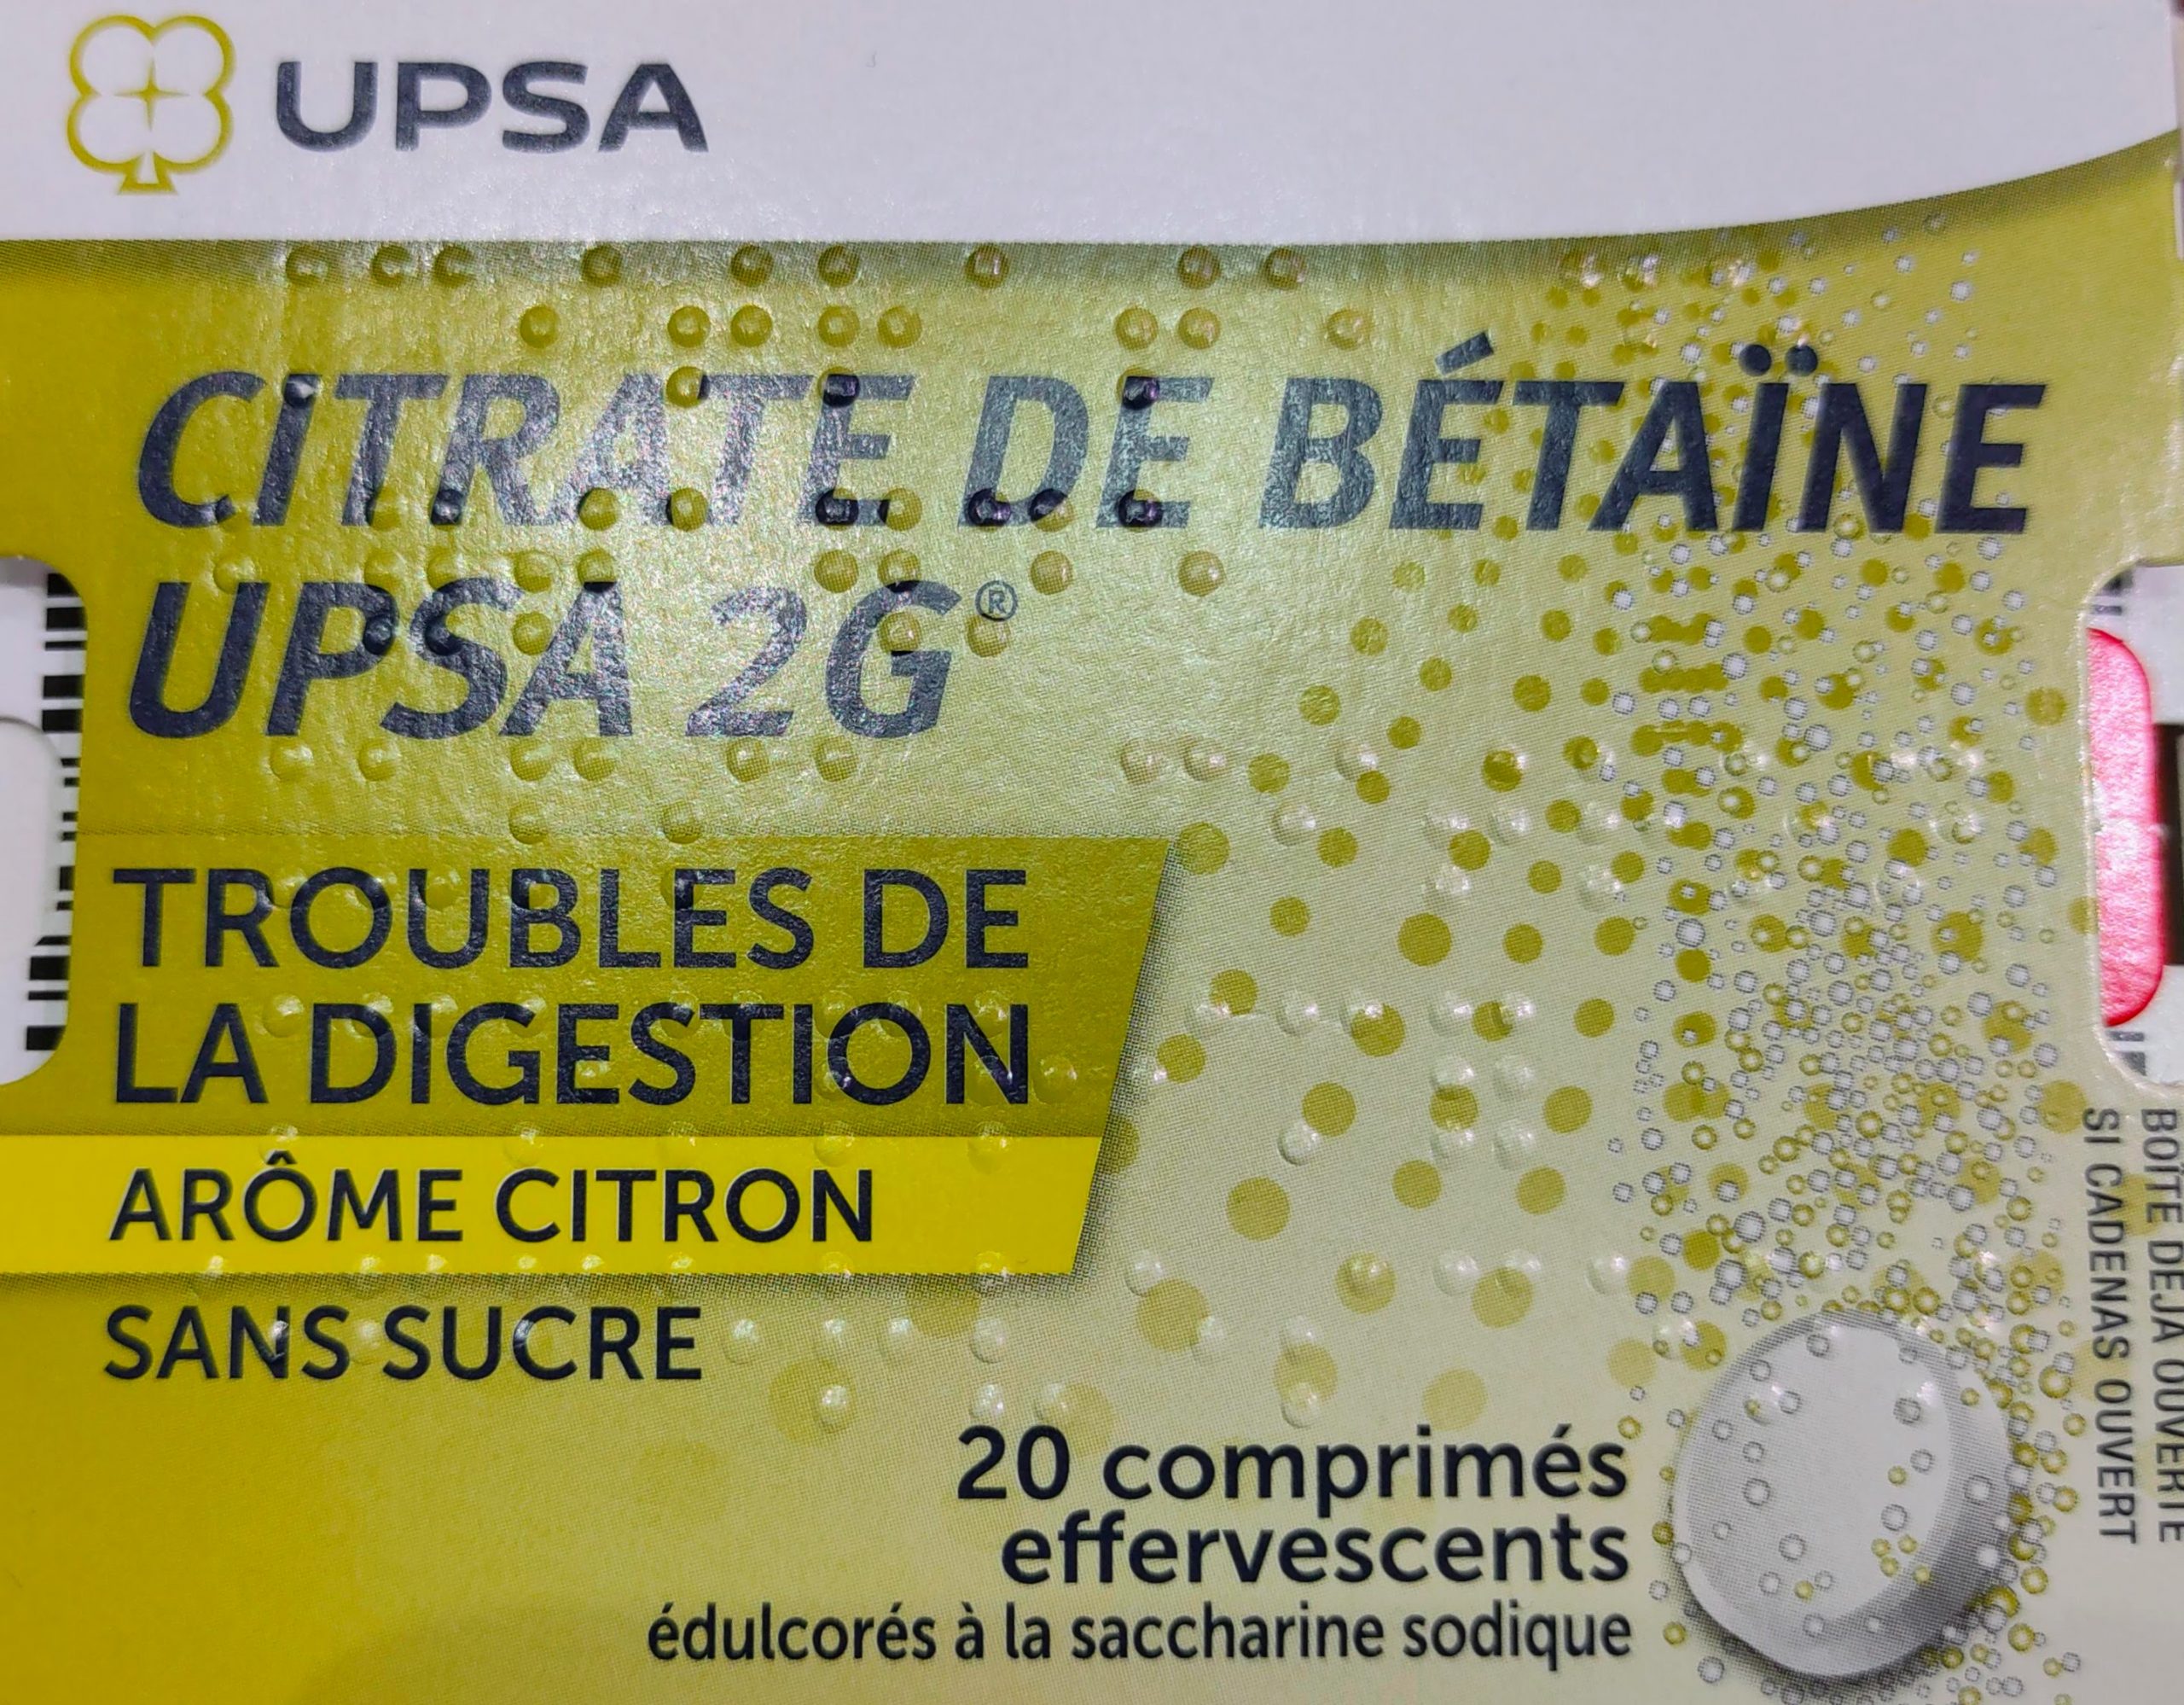 CITRATE DE BETAINE UPSA 2G Para problemas de digestión sabor limón